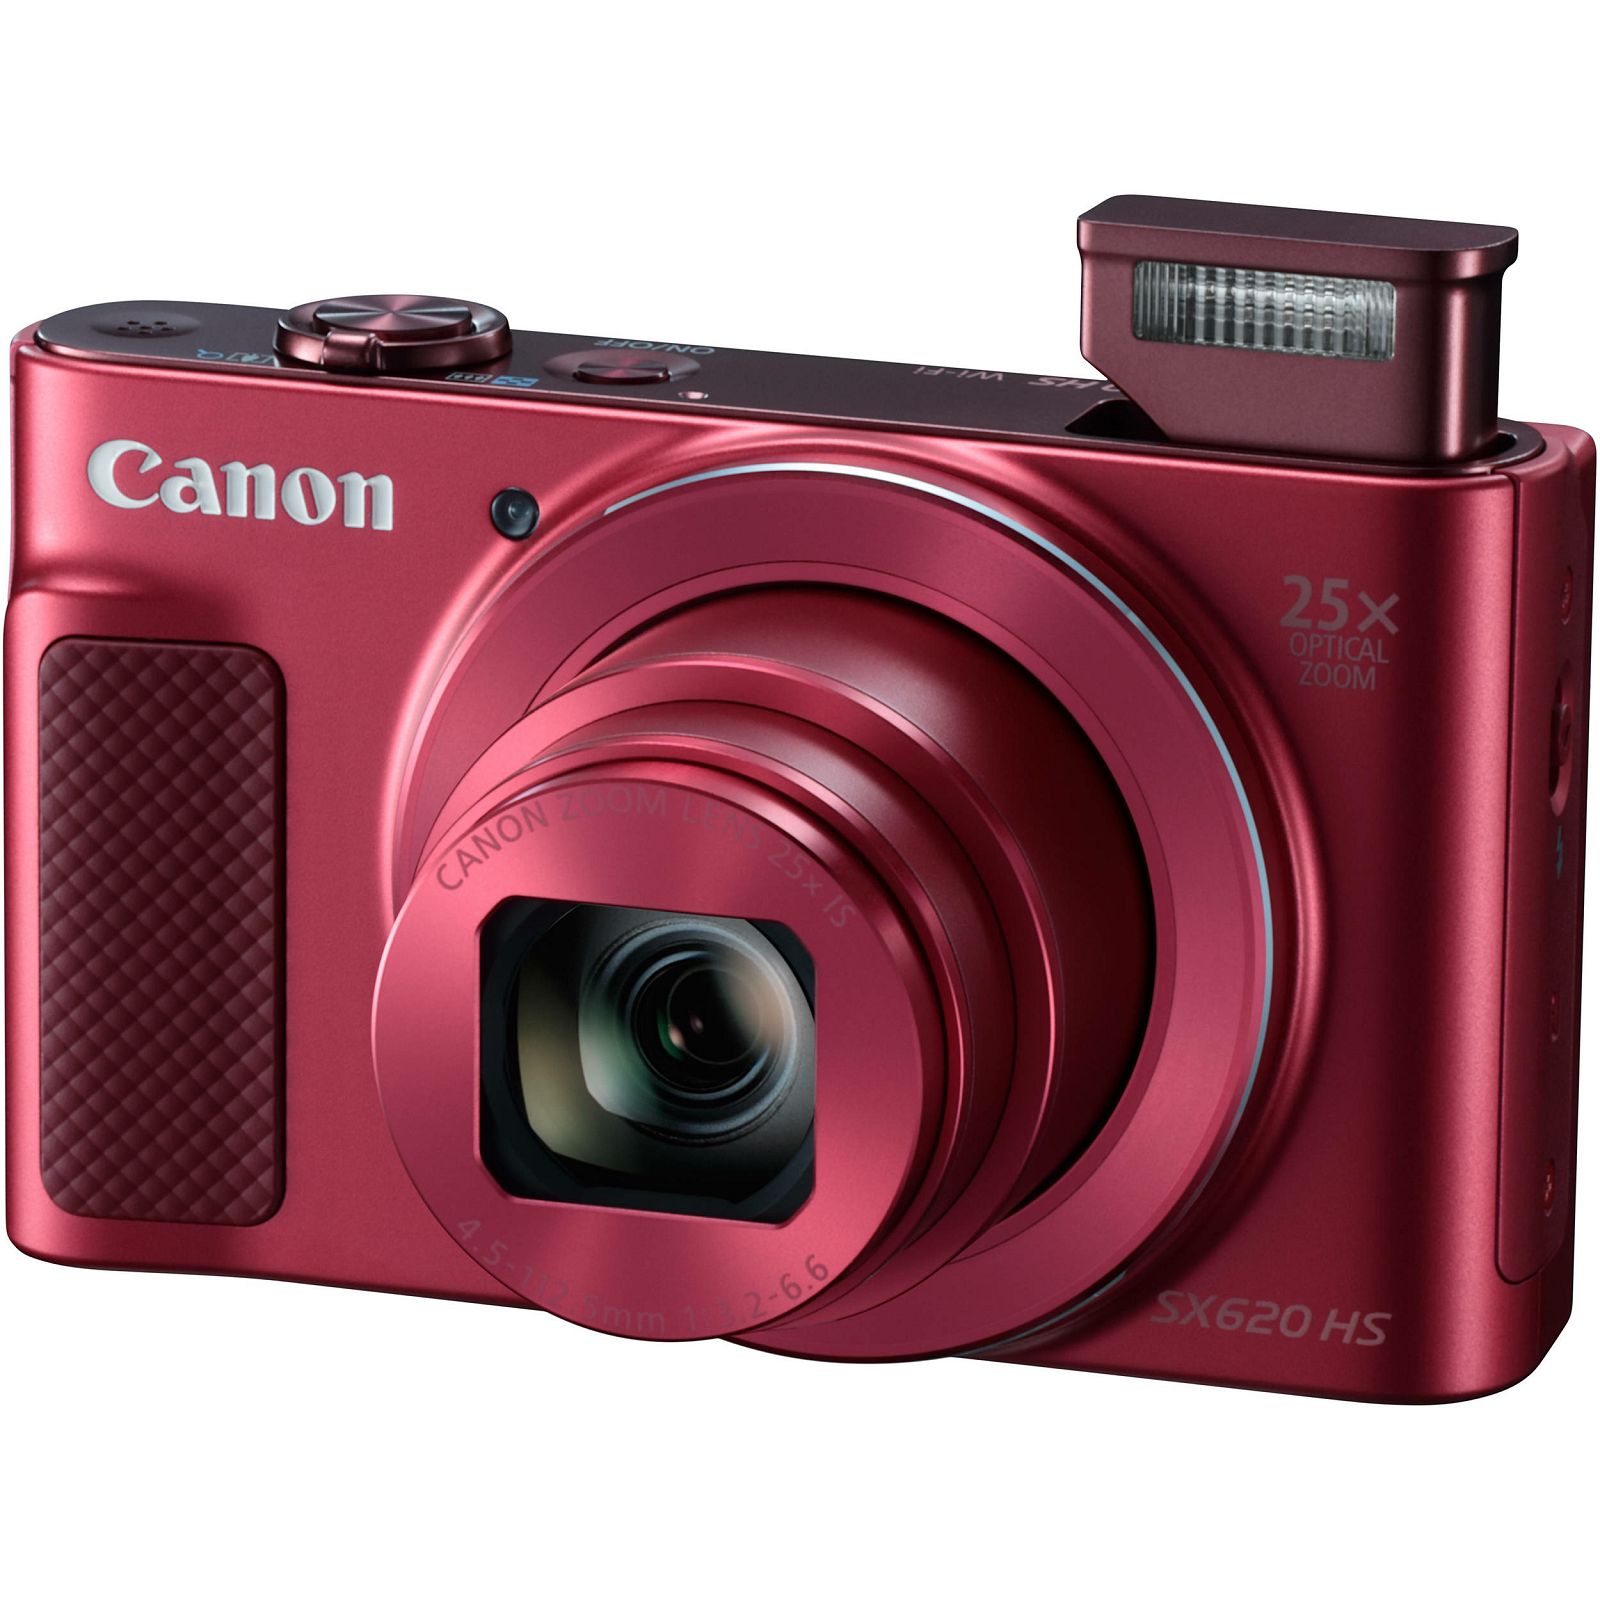 Canon Powershot SX620 HS Red crveni digitalni fotoaparat SX620 HS